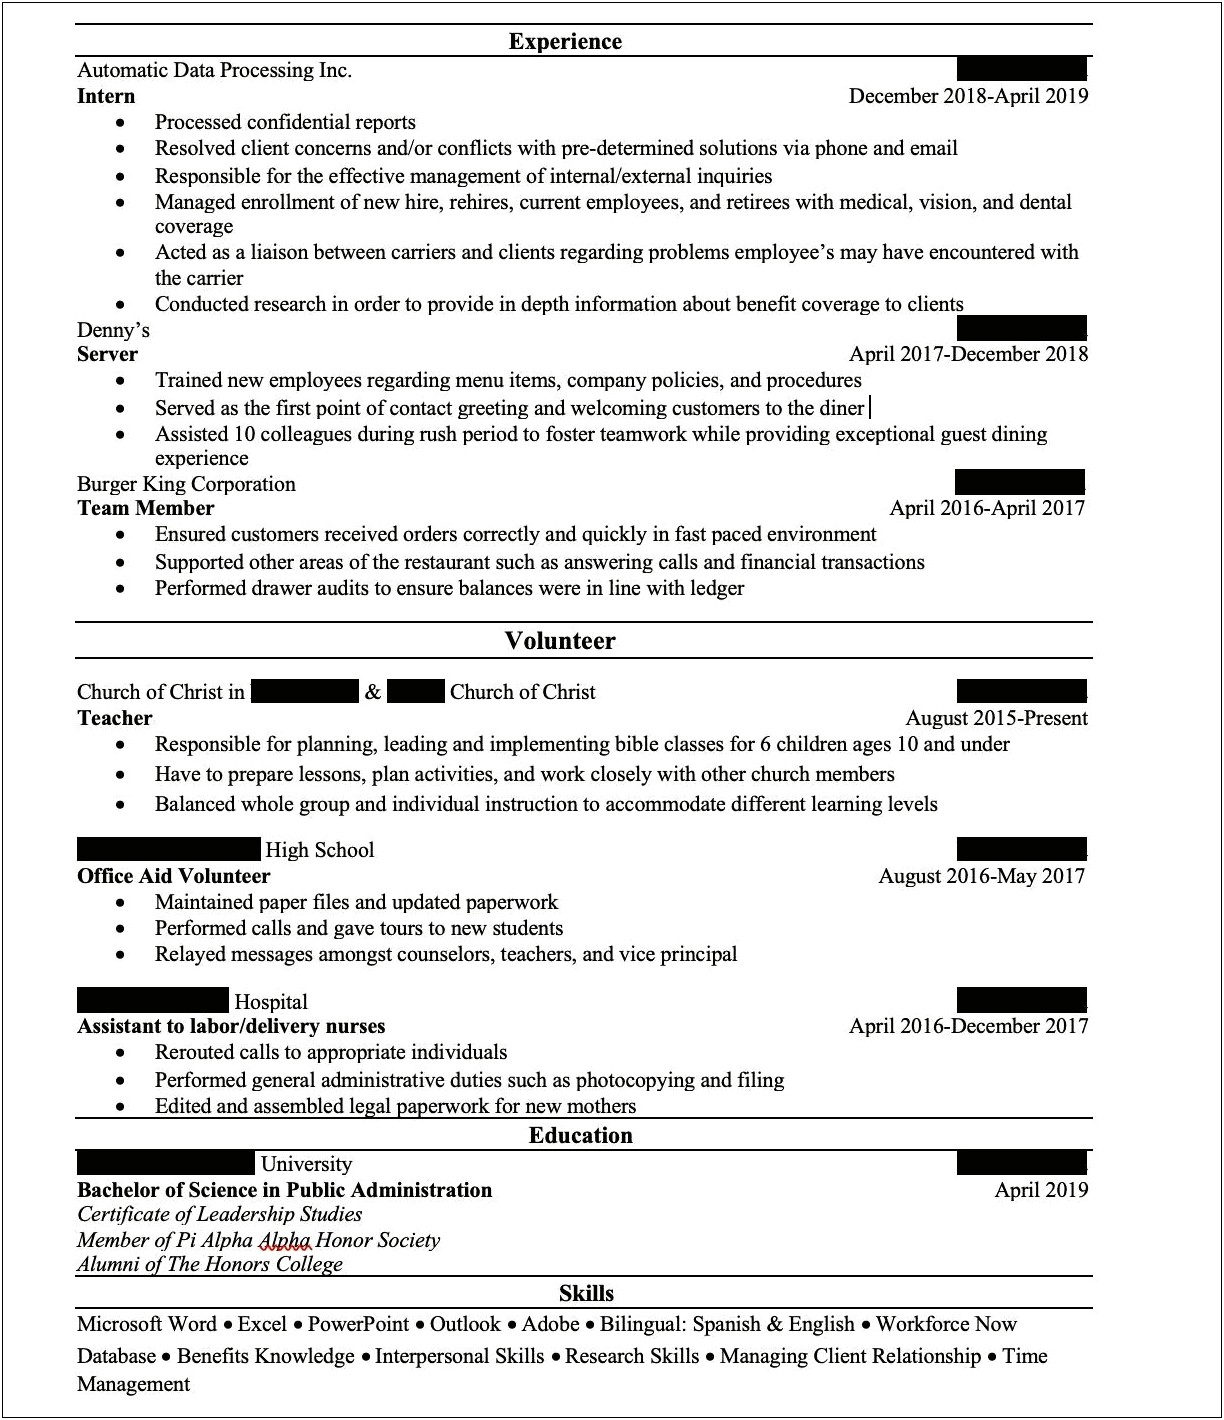 Human Resource Job Description On Resume